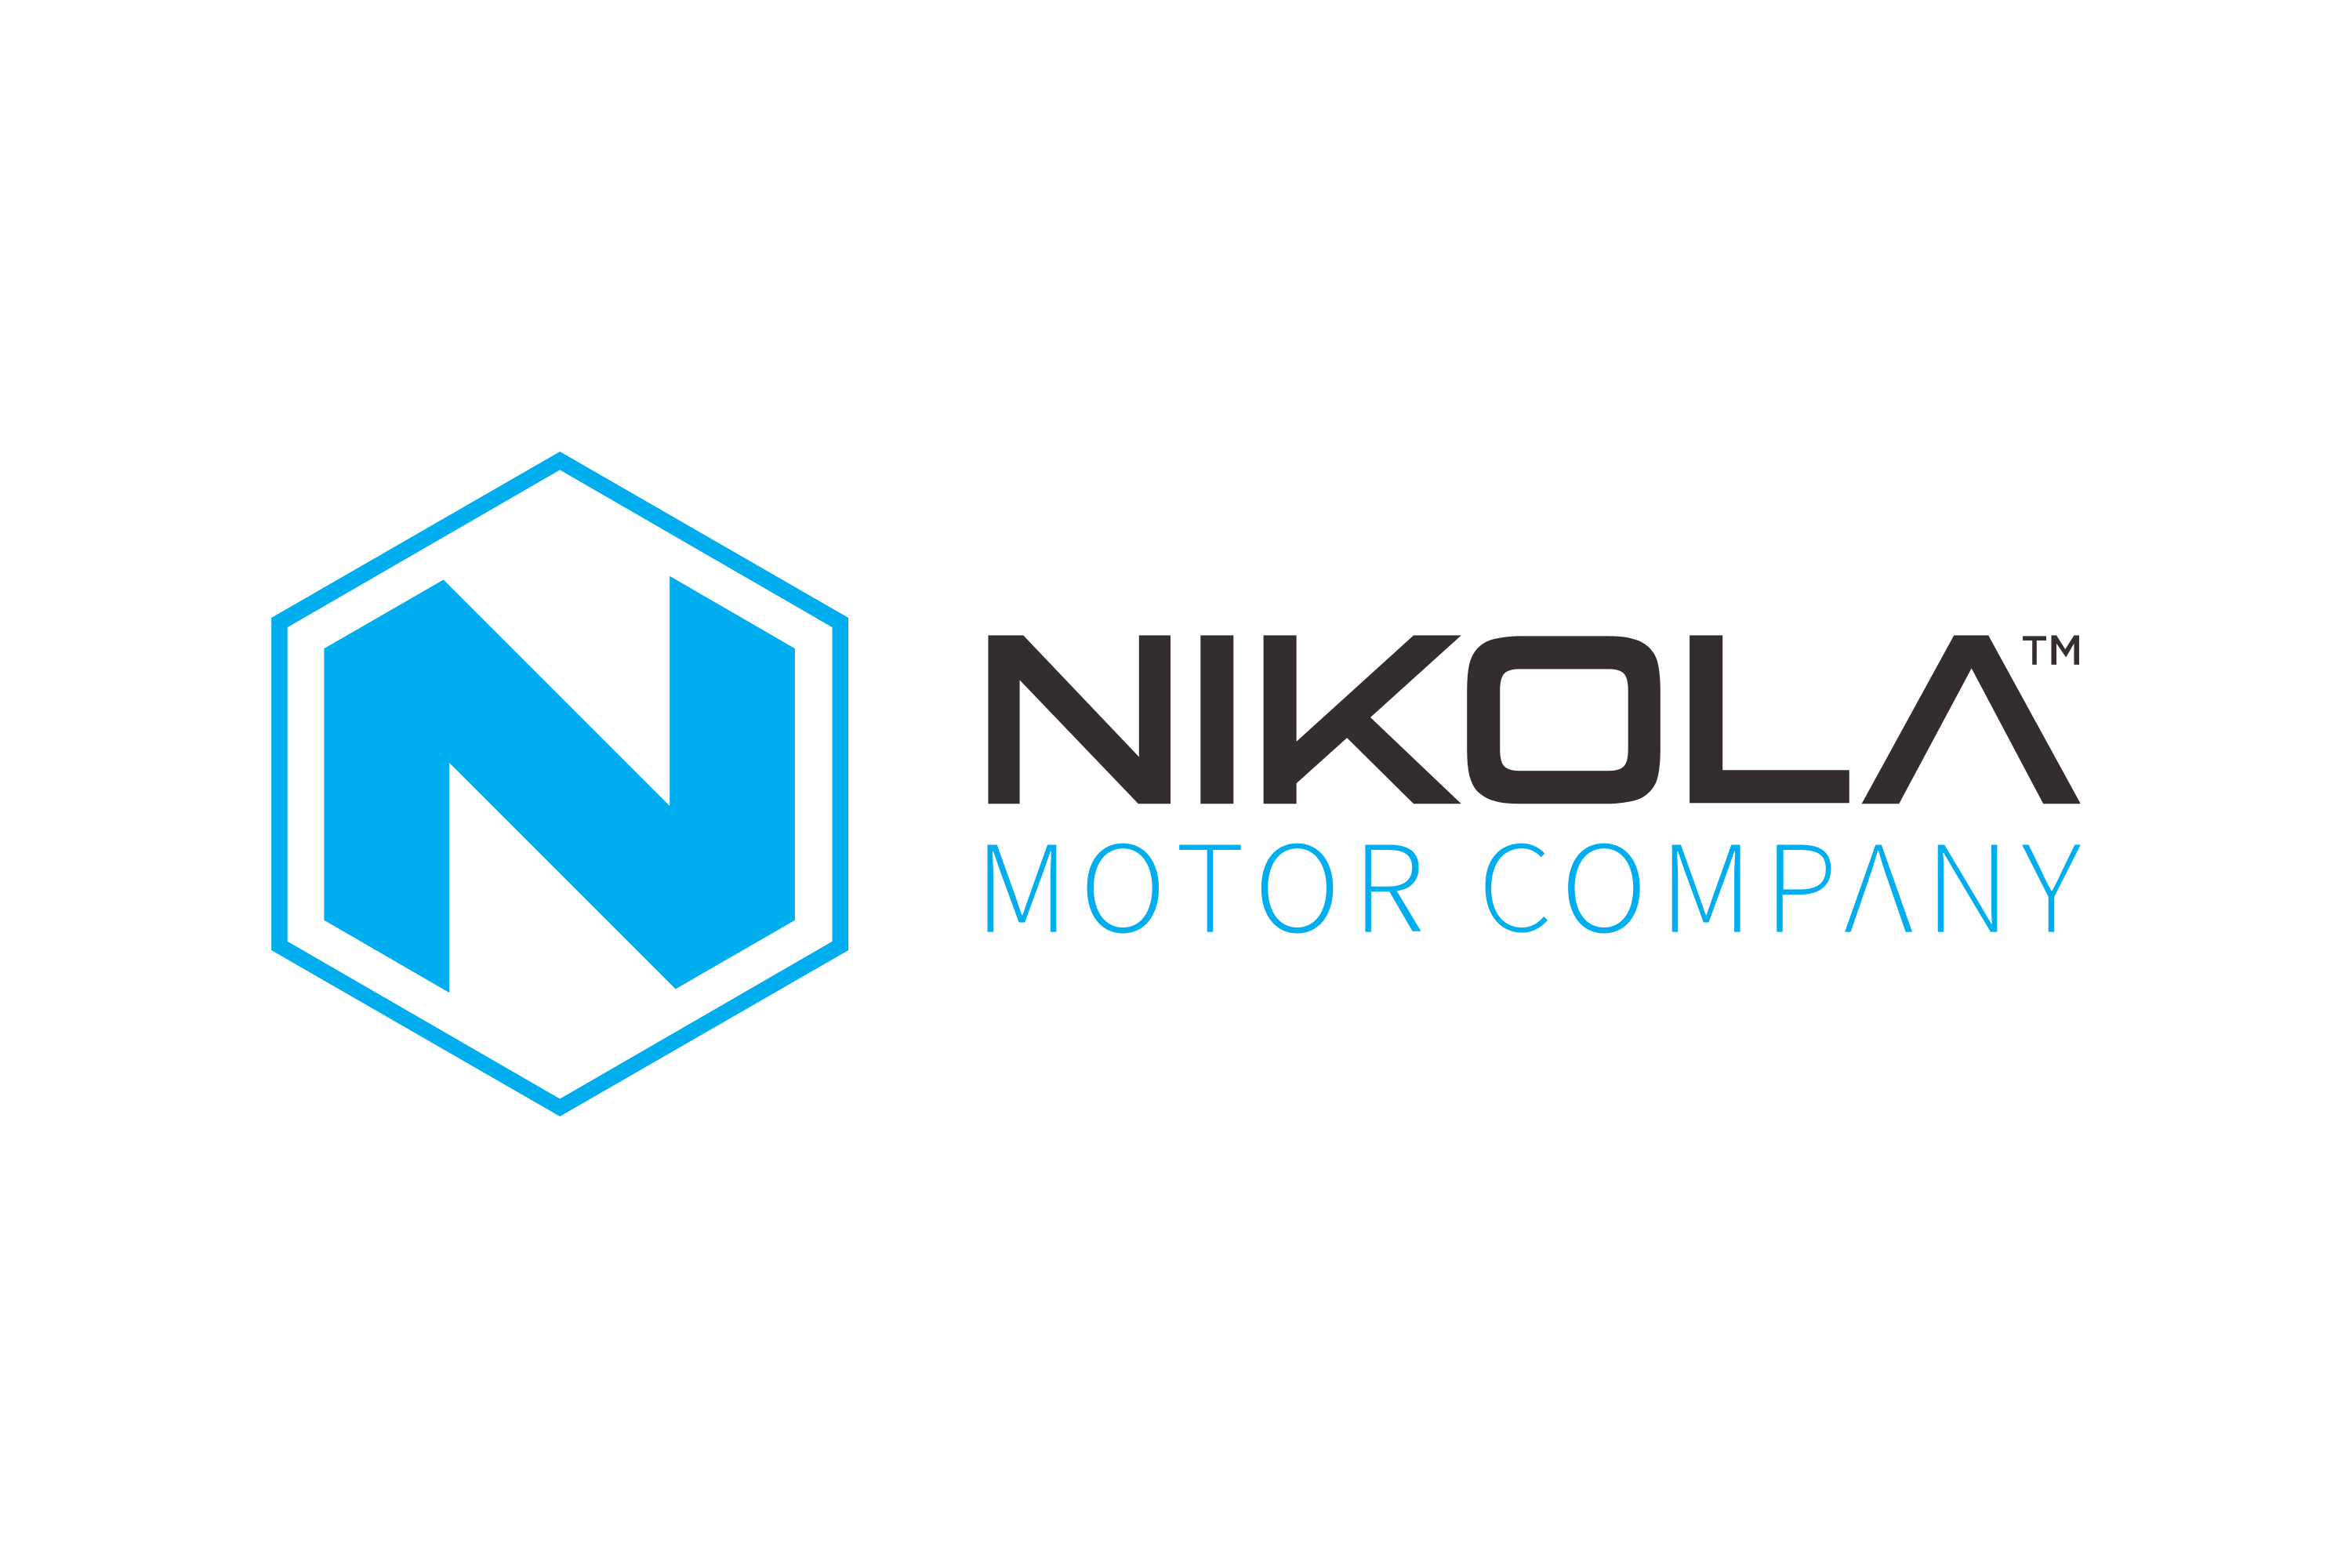 Download Nikola Motor Company Logo in SVG Vector or PNG File Format